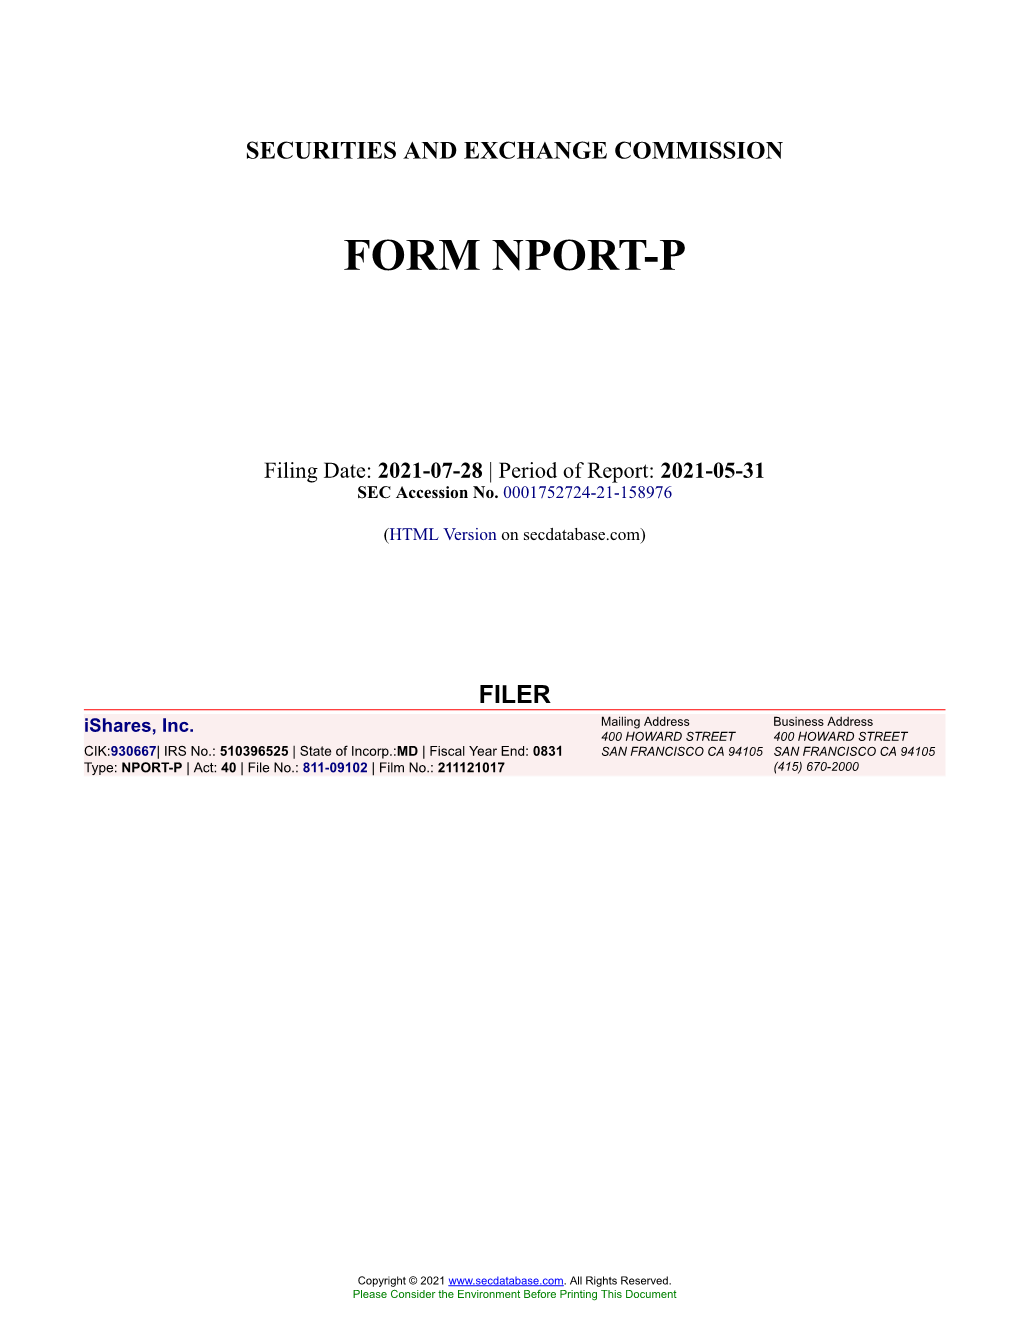 Ishares, Inc. Form NPORT-P Filed 2021-07-28